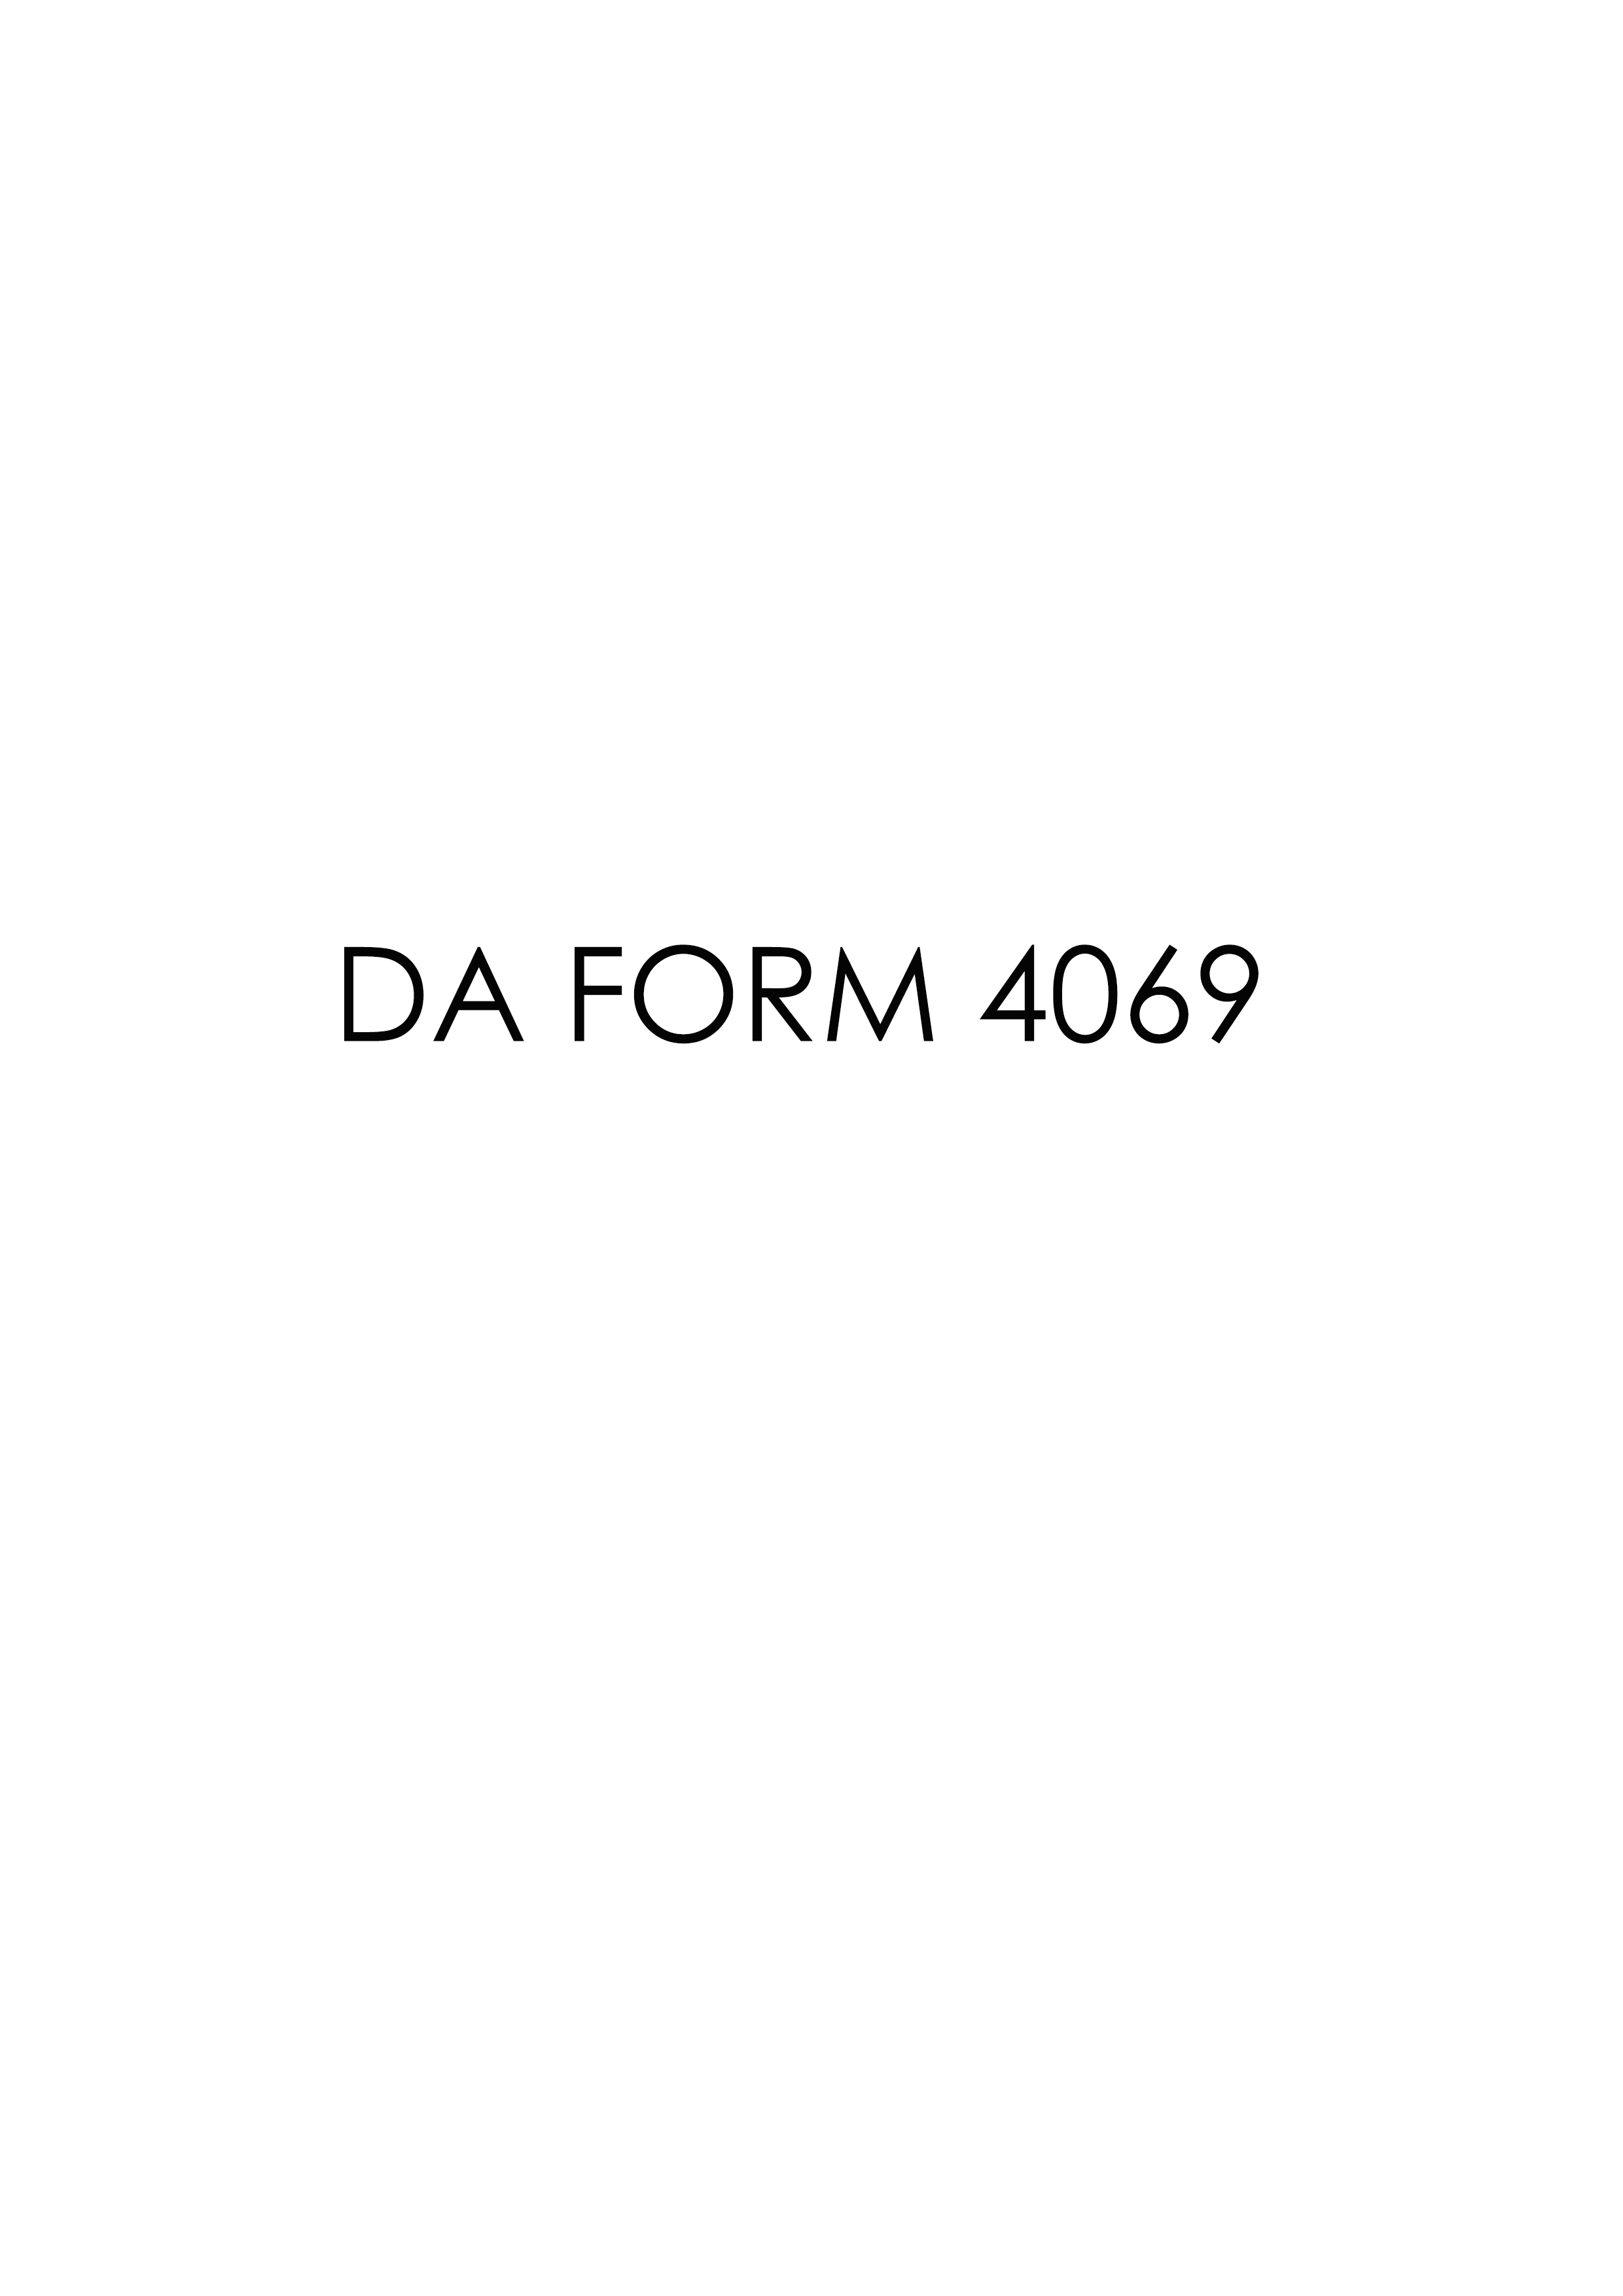 da Form 4069 fillable